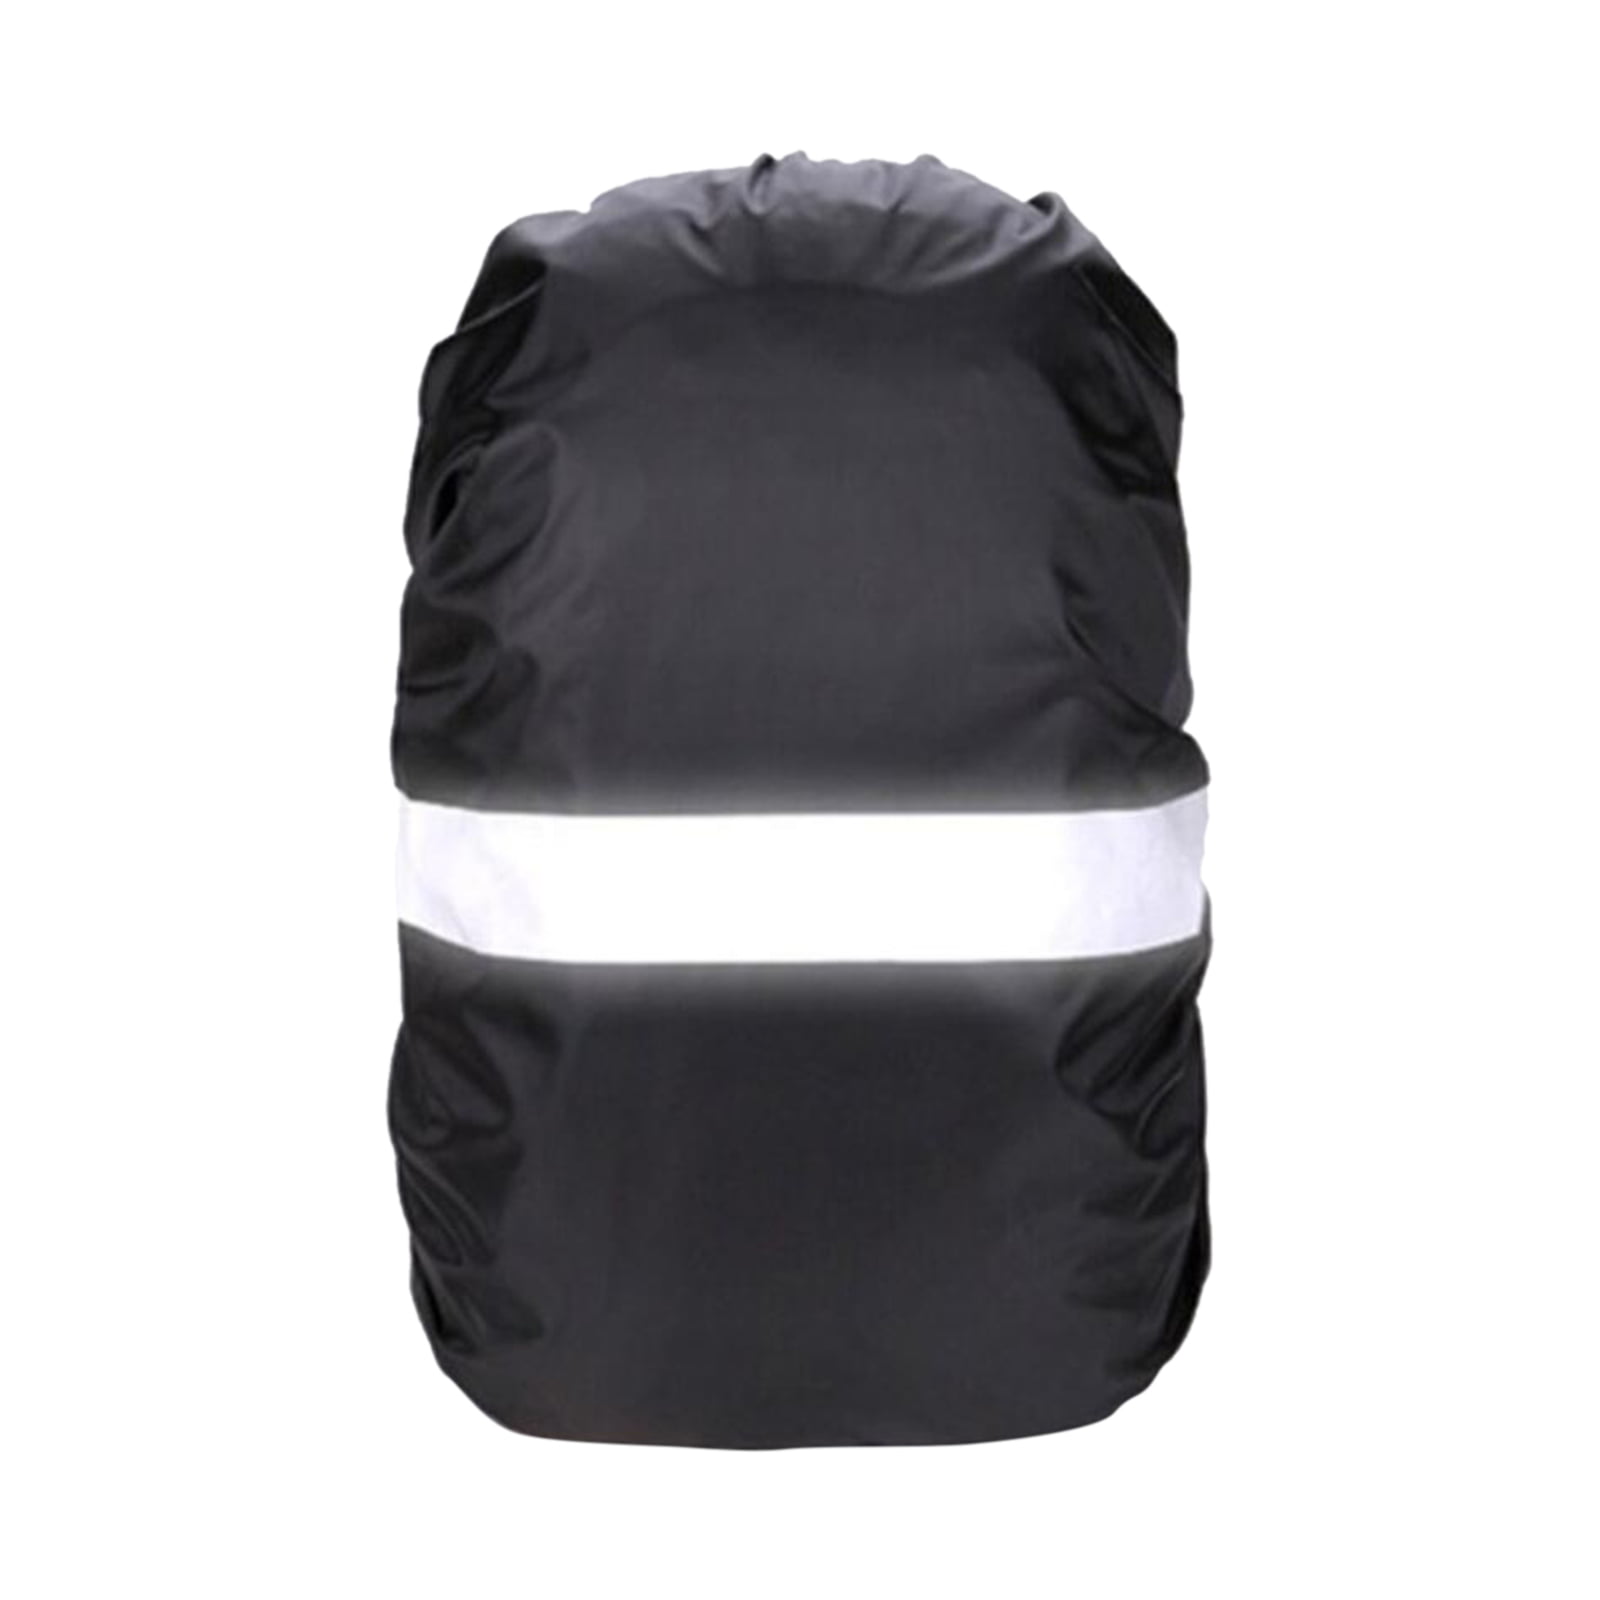 KingCamp Dust Rain Cover Waterproof Bag for Backpack Rucksack Traval Camp Hiking 